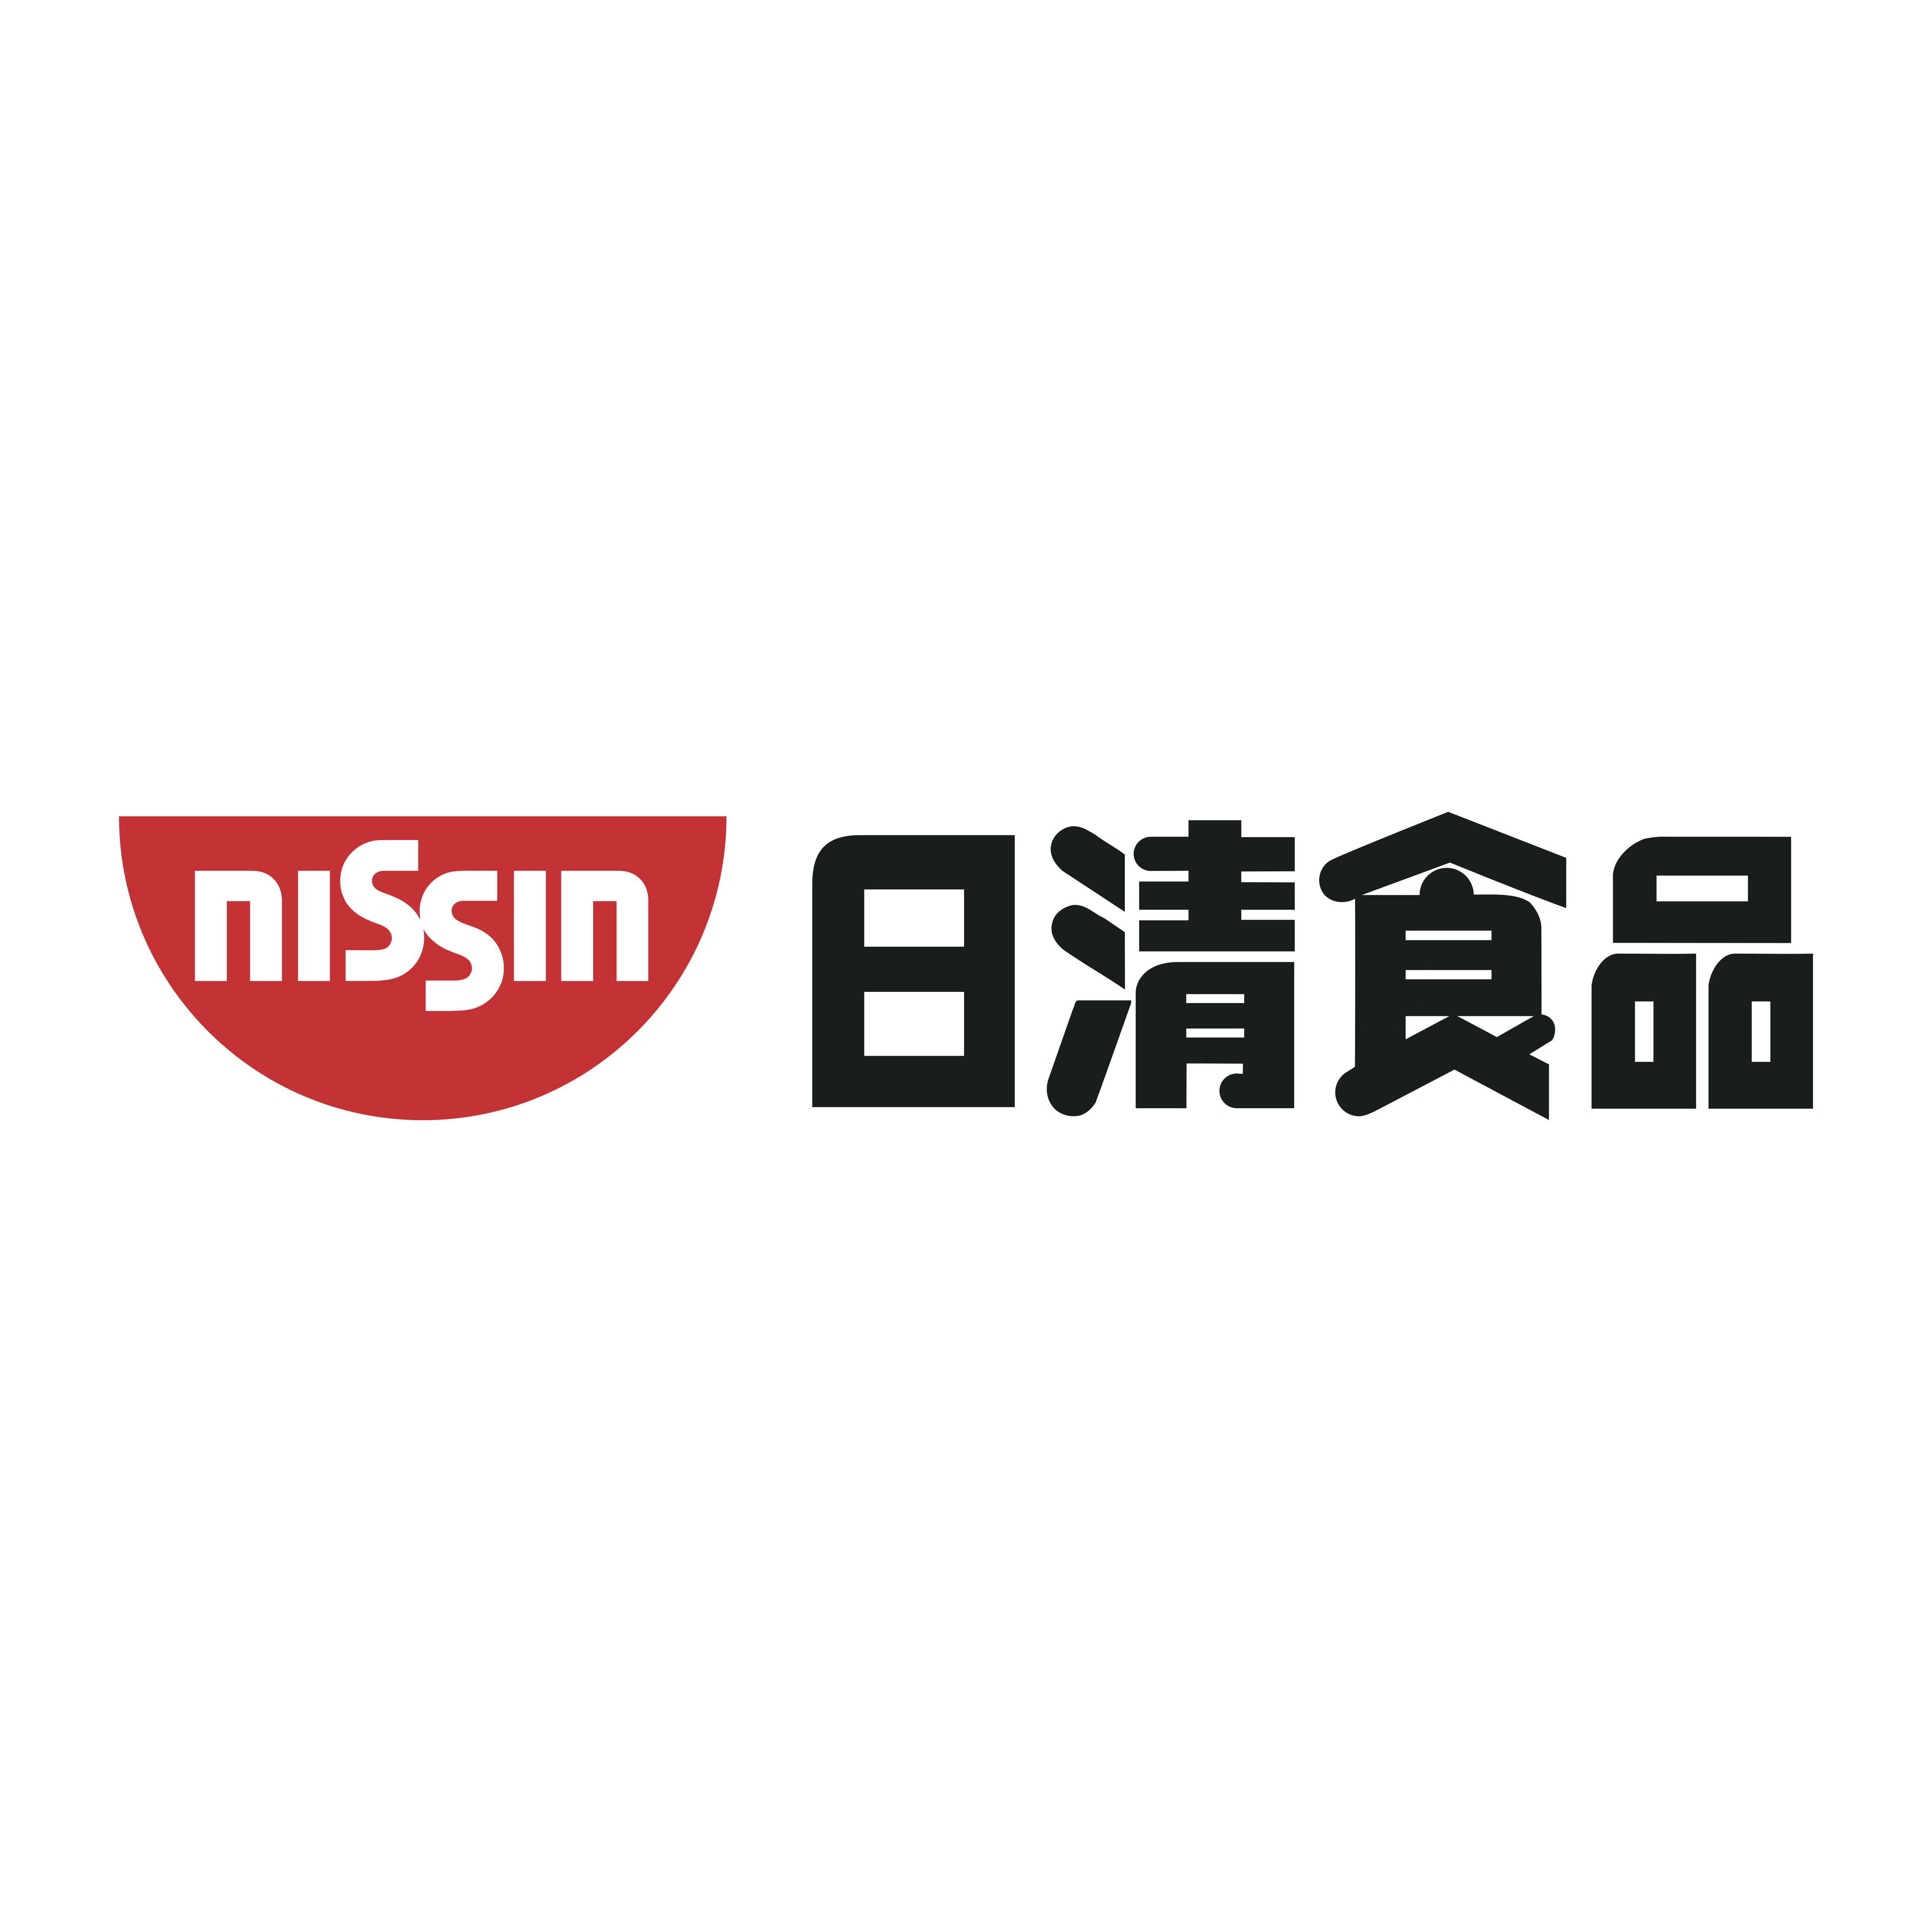 Nissin Logo - Nissin – Logos Download